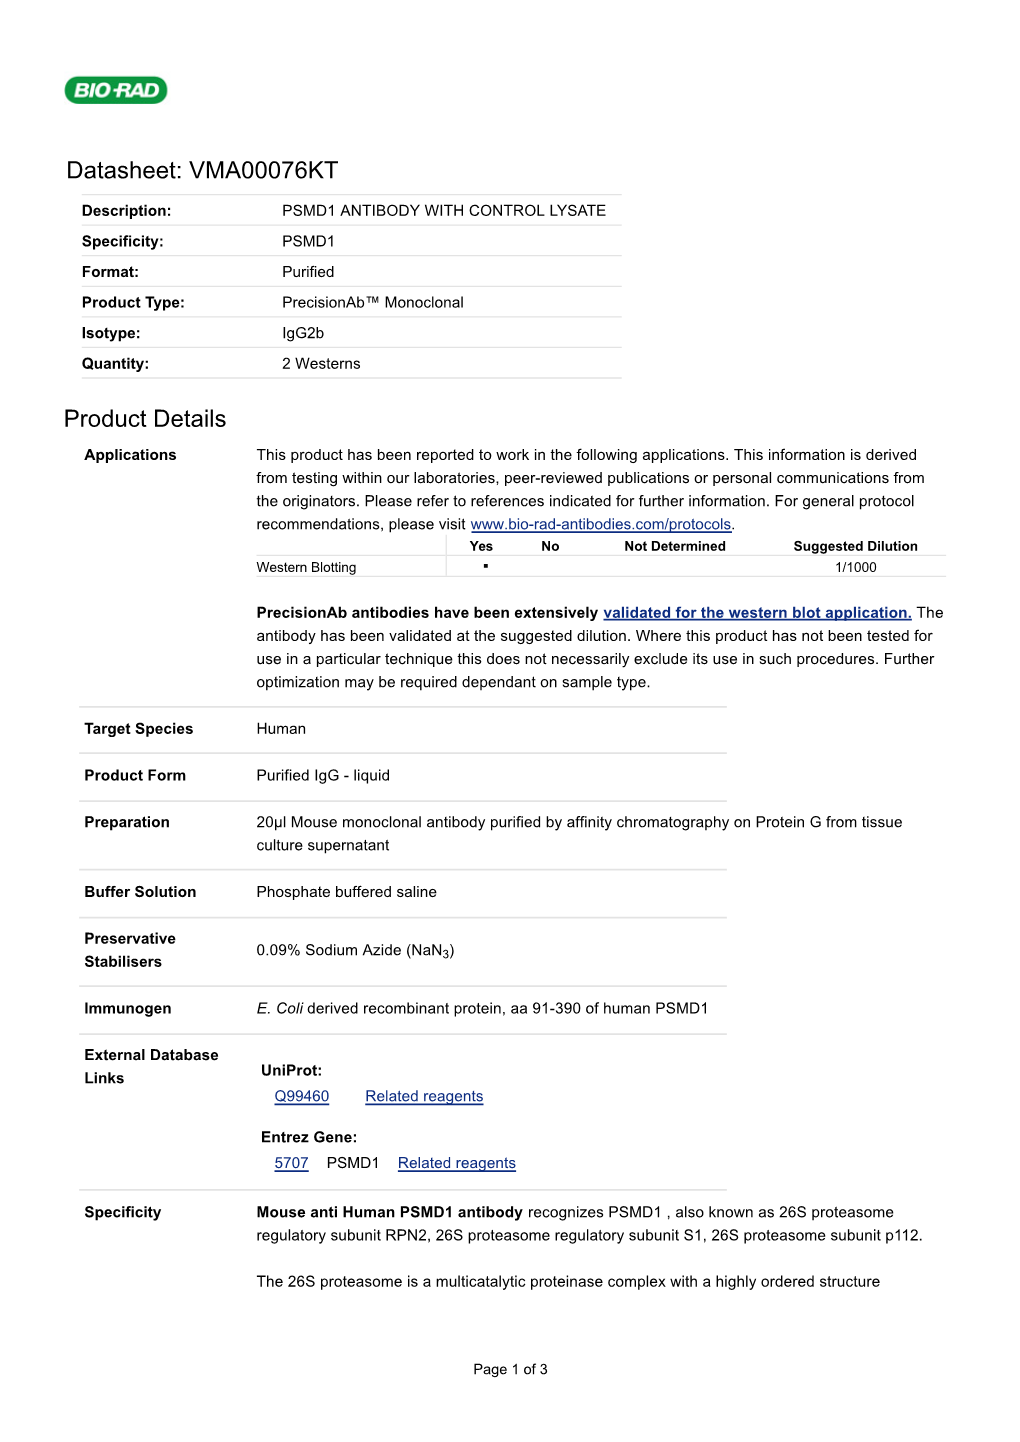 Datasheet: VMA00076KT Product Details